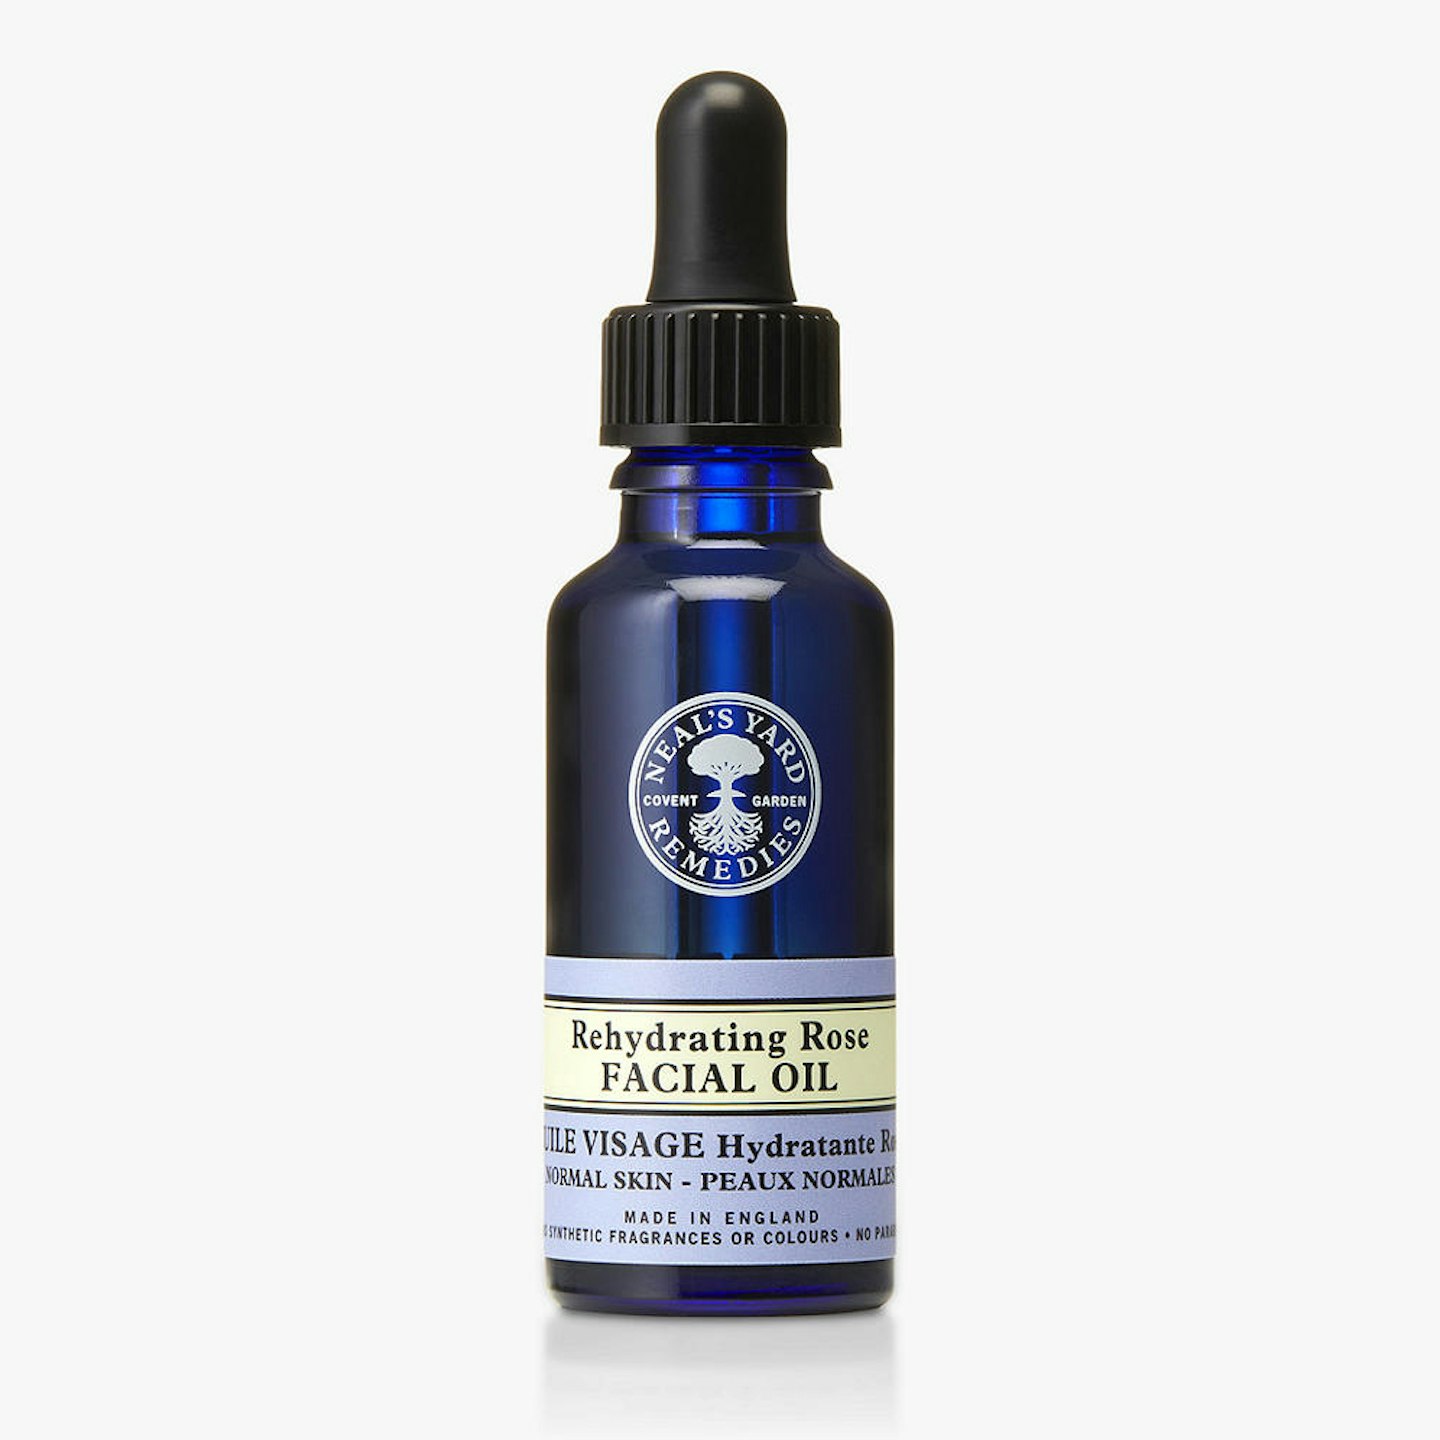 Neal's Yard Remedies Rehydrating Rose Facial Oil, 30ml